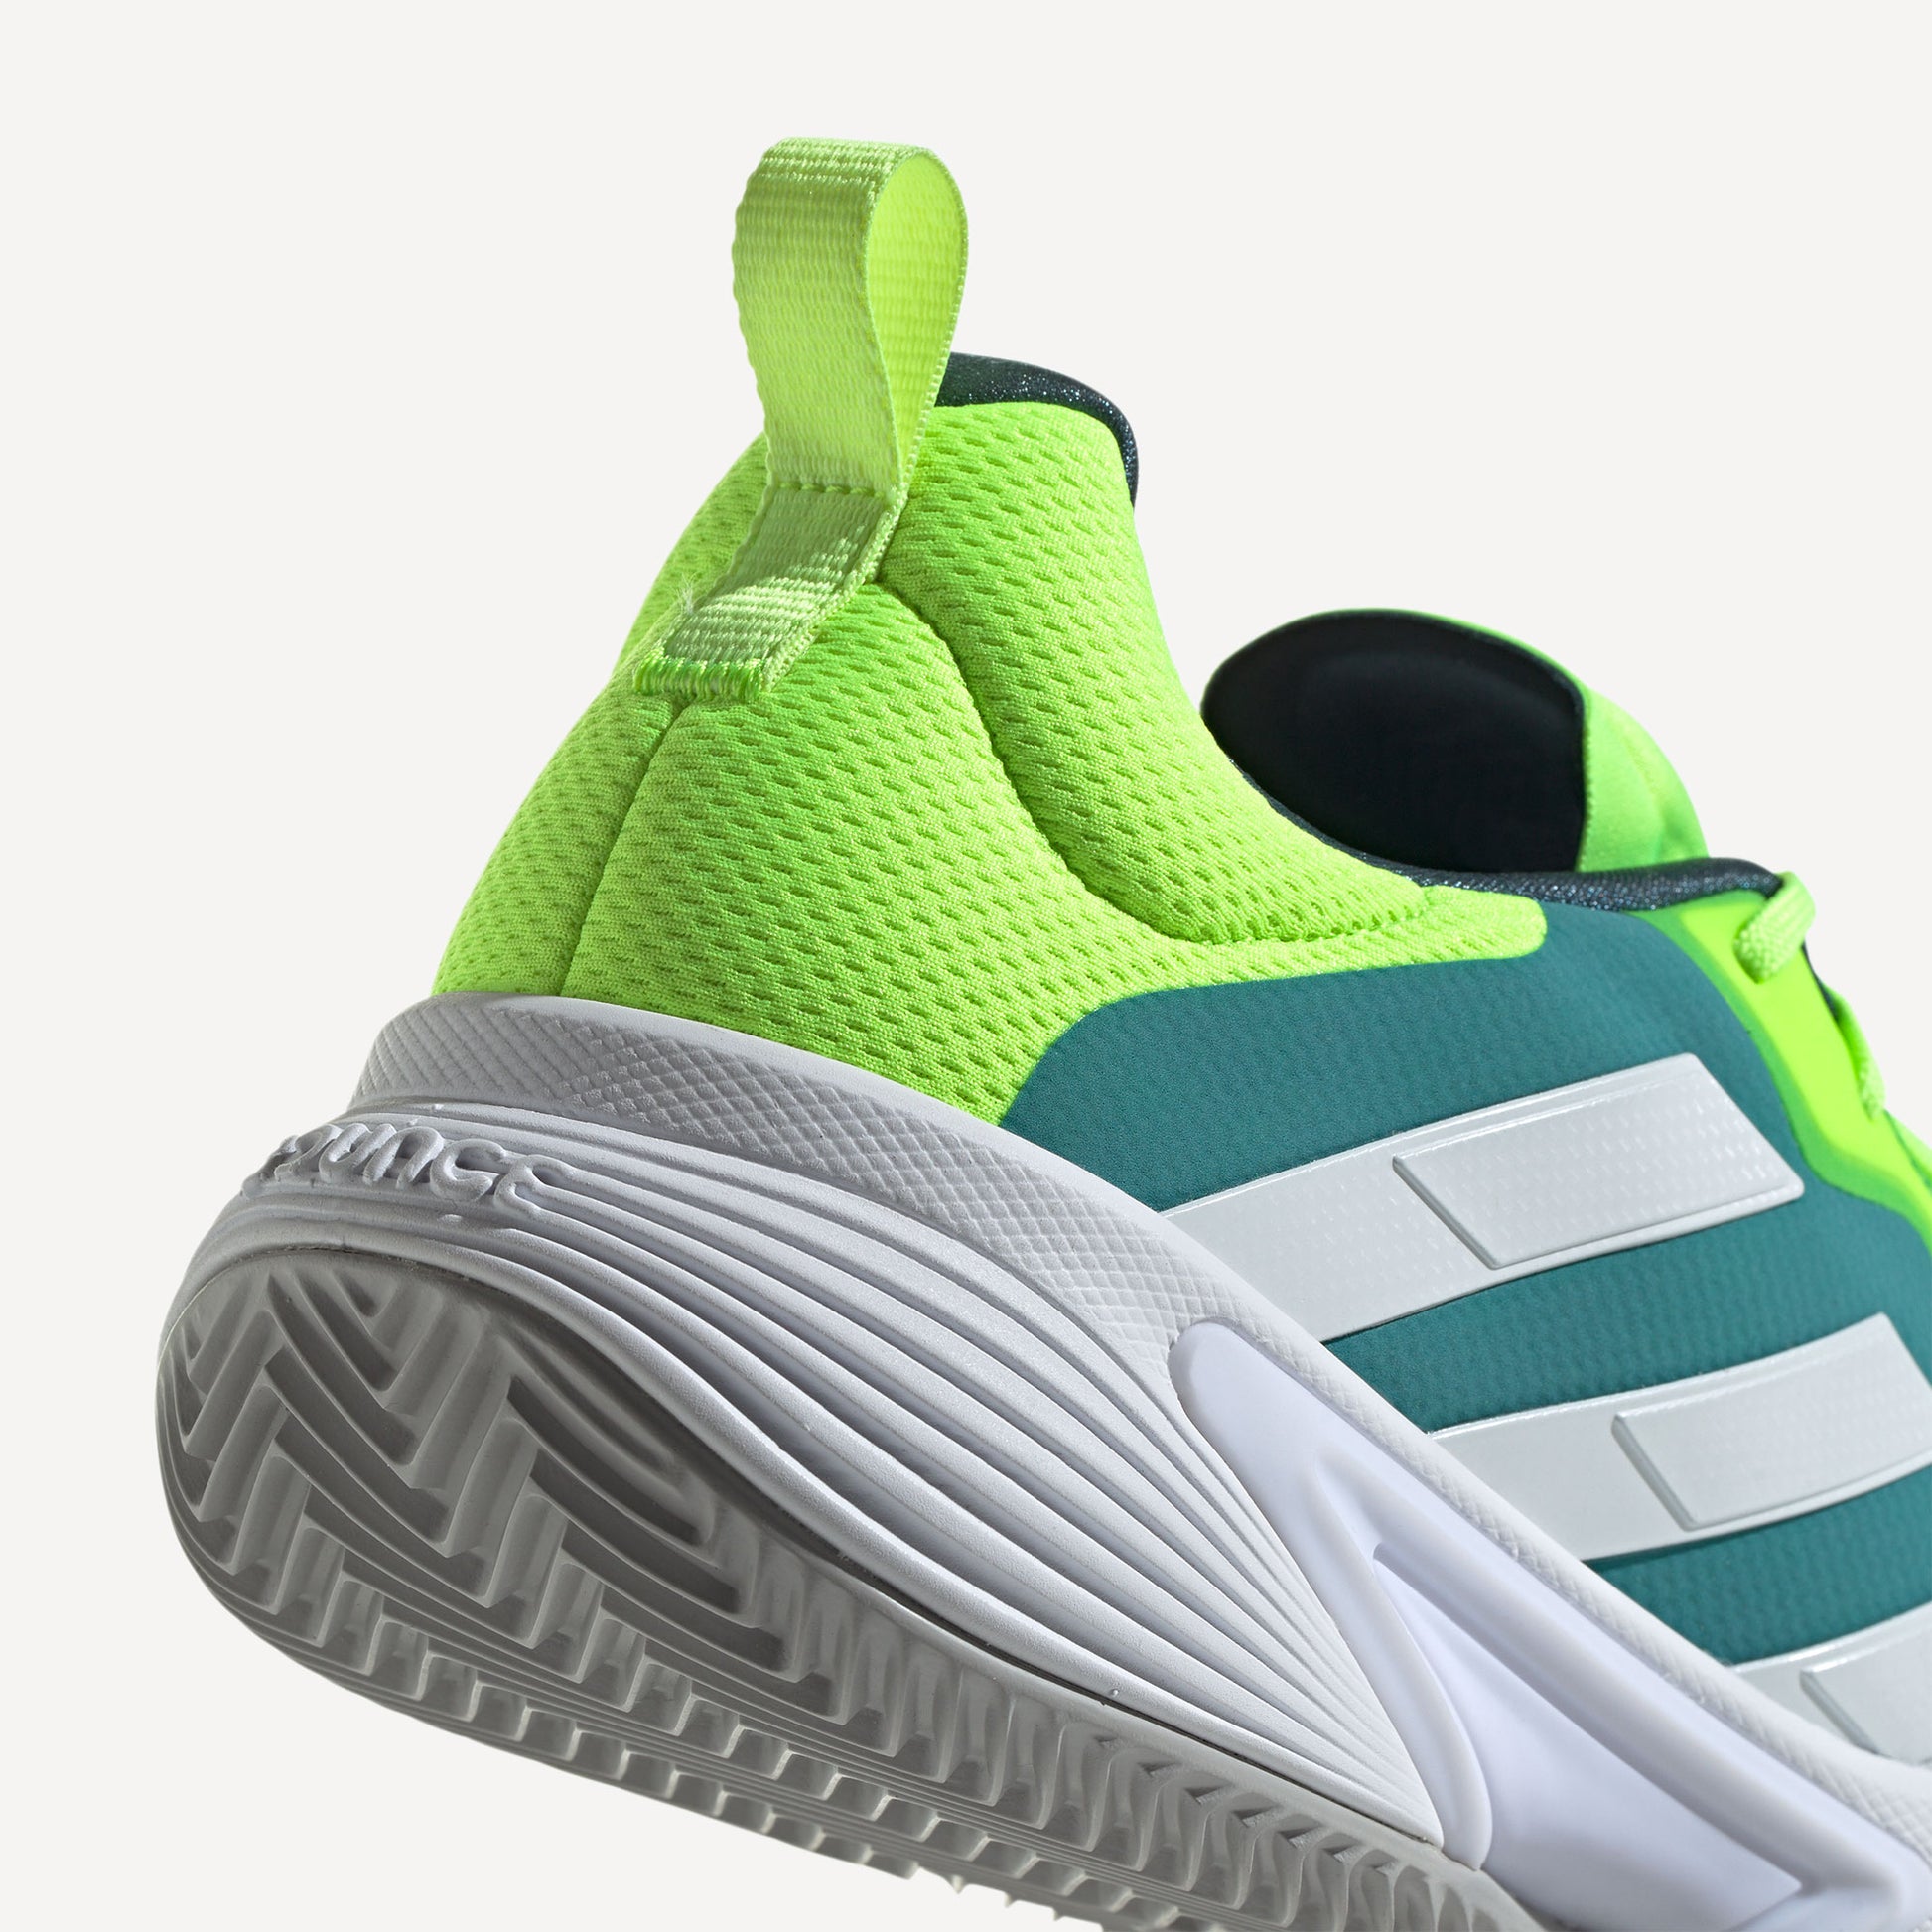 adidas Barricade Men's Clay Court Tennis Shoes Green (7)